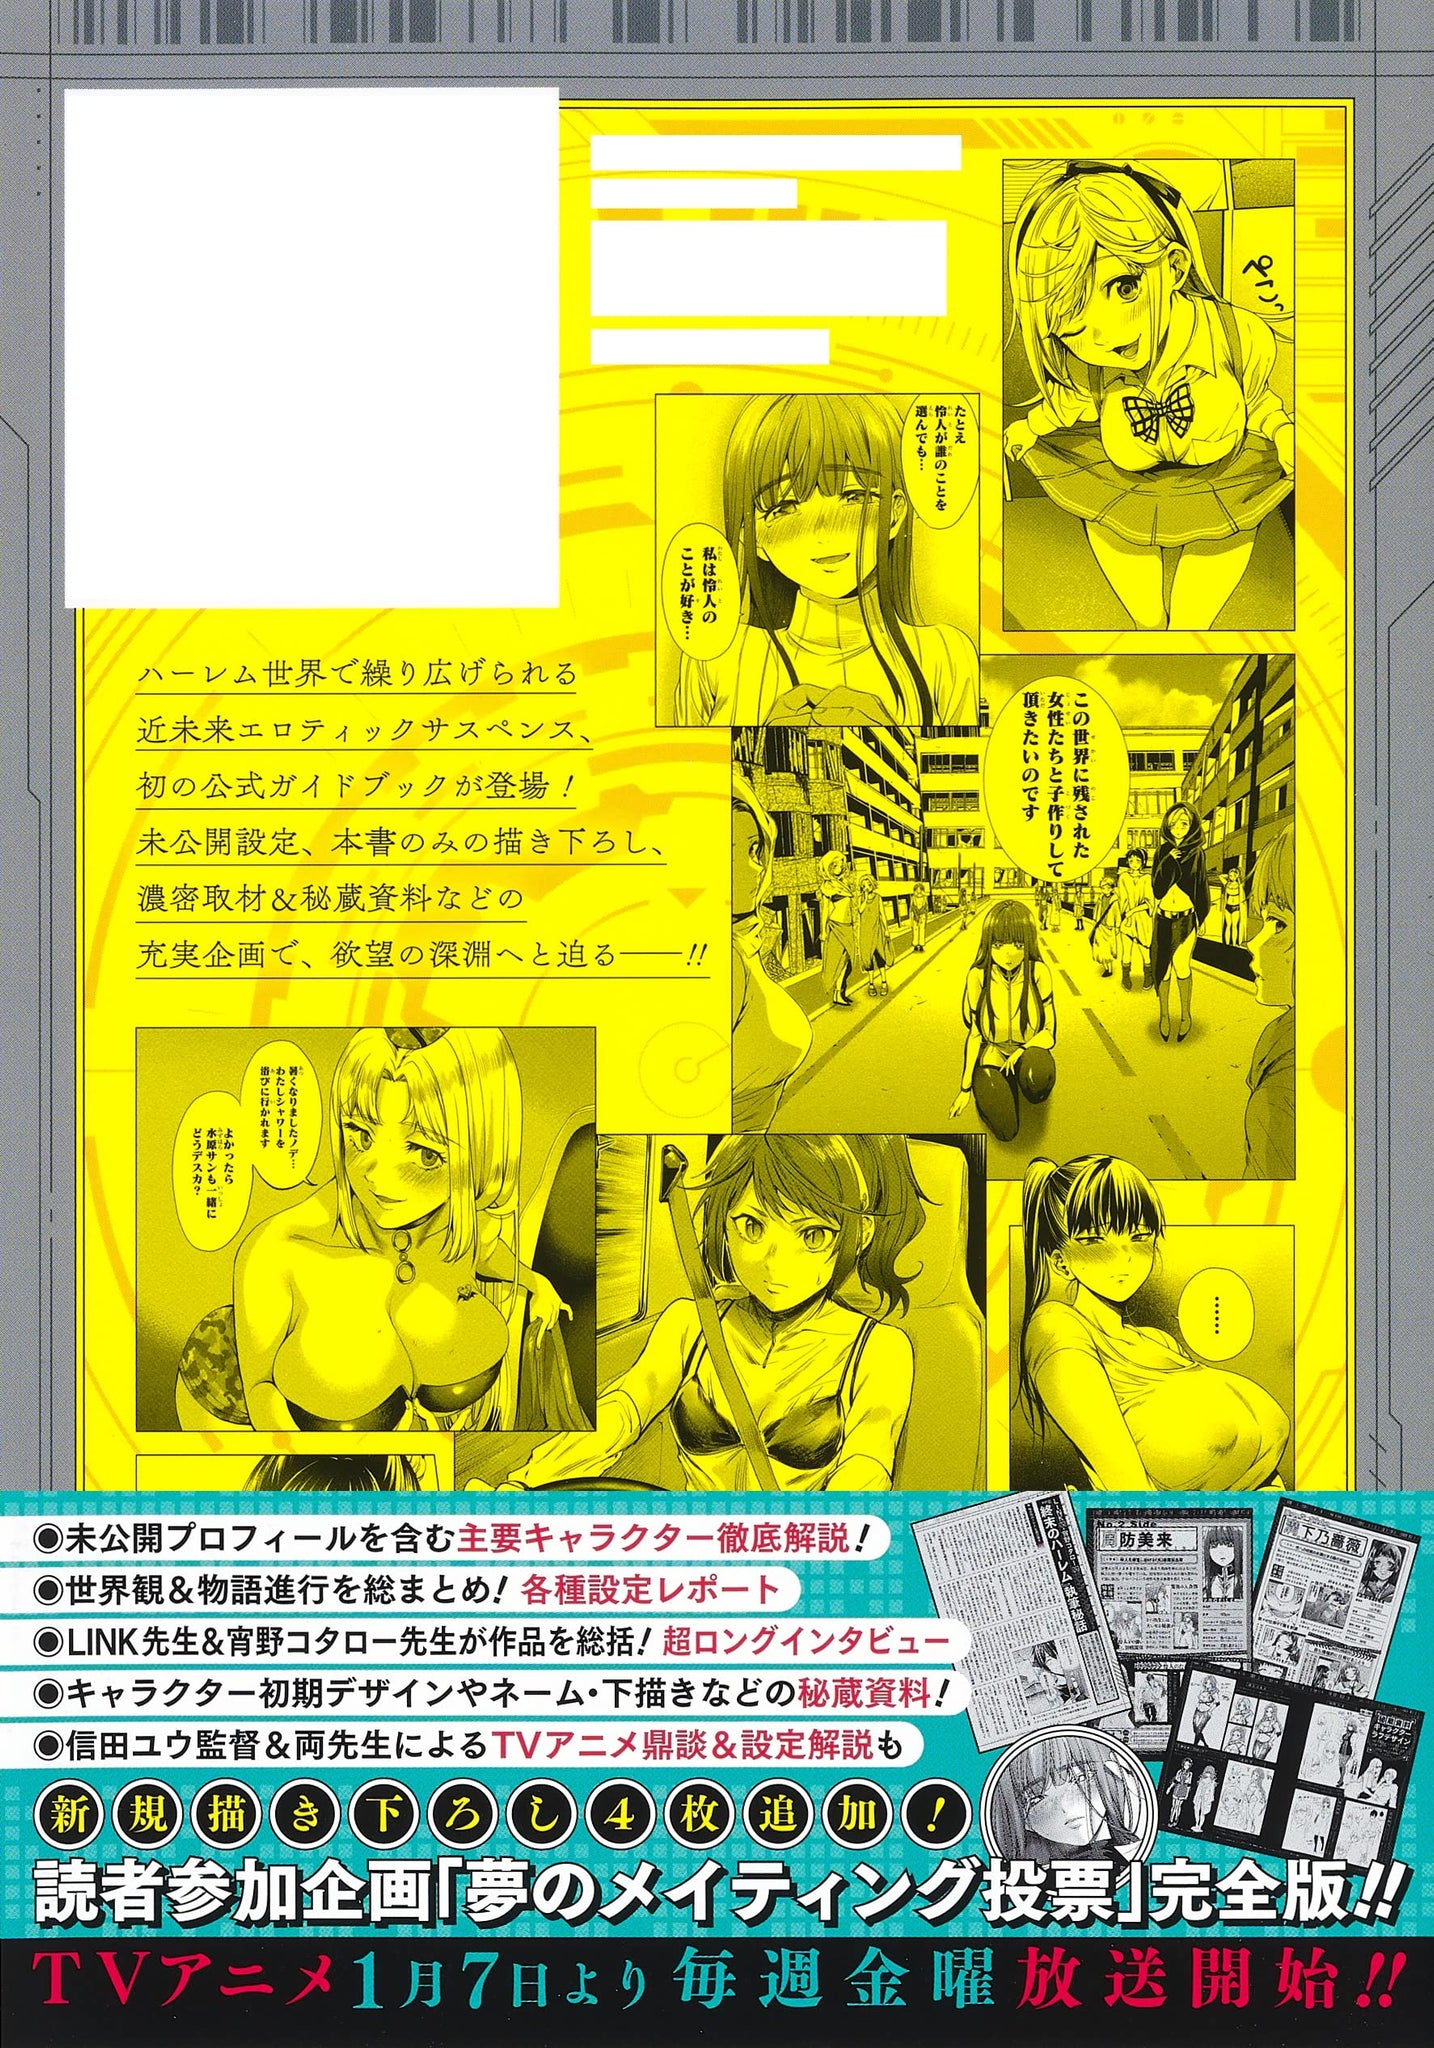 New Shumatsu no Harem Guidebook World's End Report+14+2 Japanese End Harem